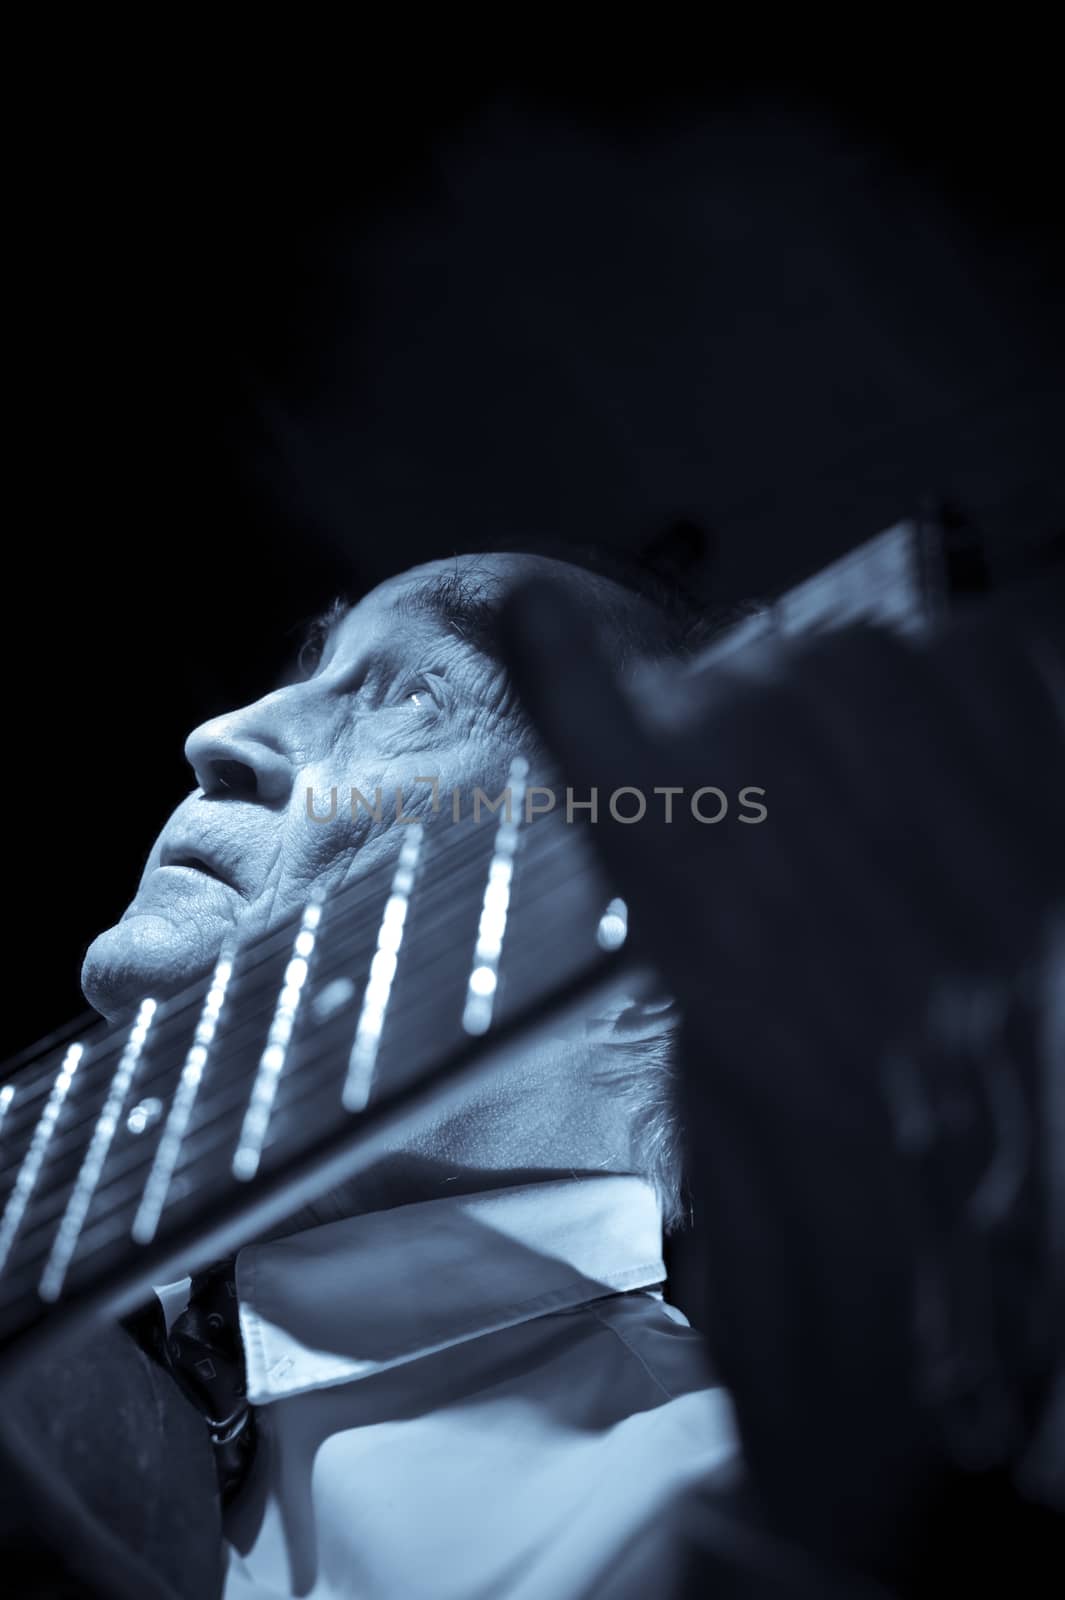 An elderly man in white shirt playing an acoustic guitar. Dark background. Monochrome.